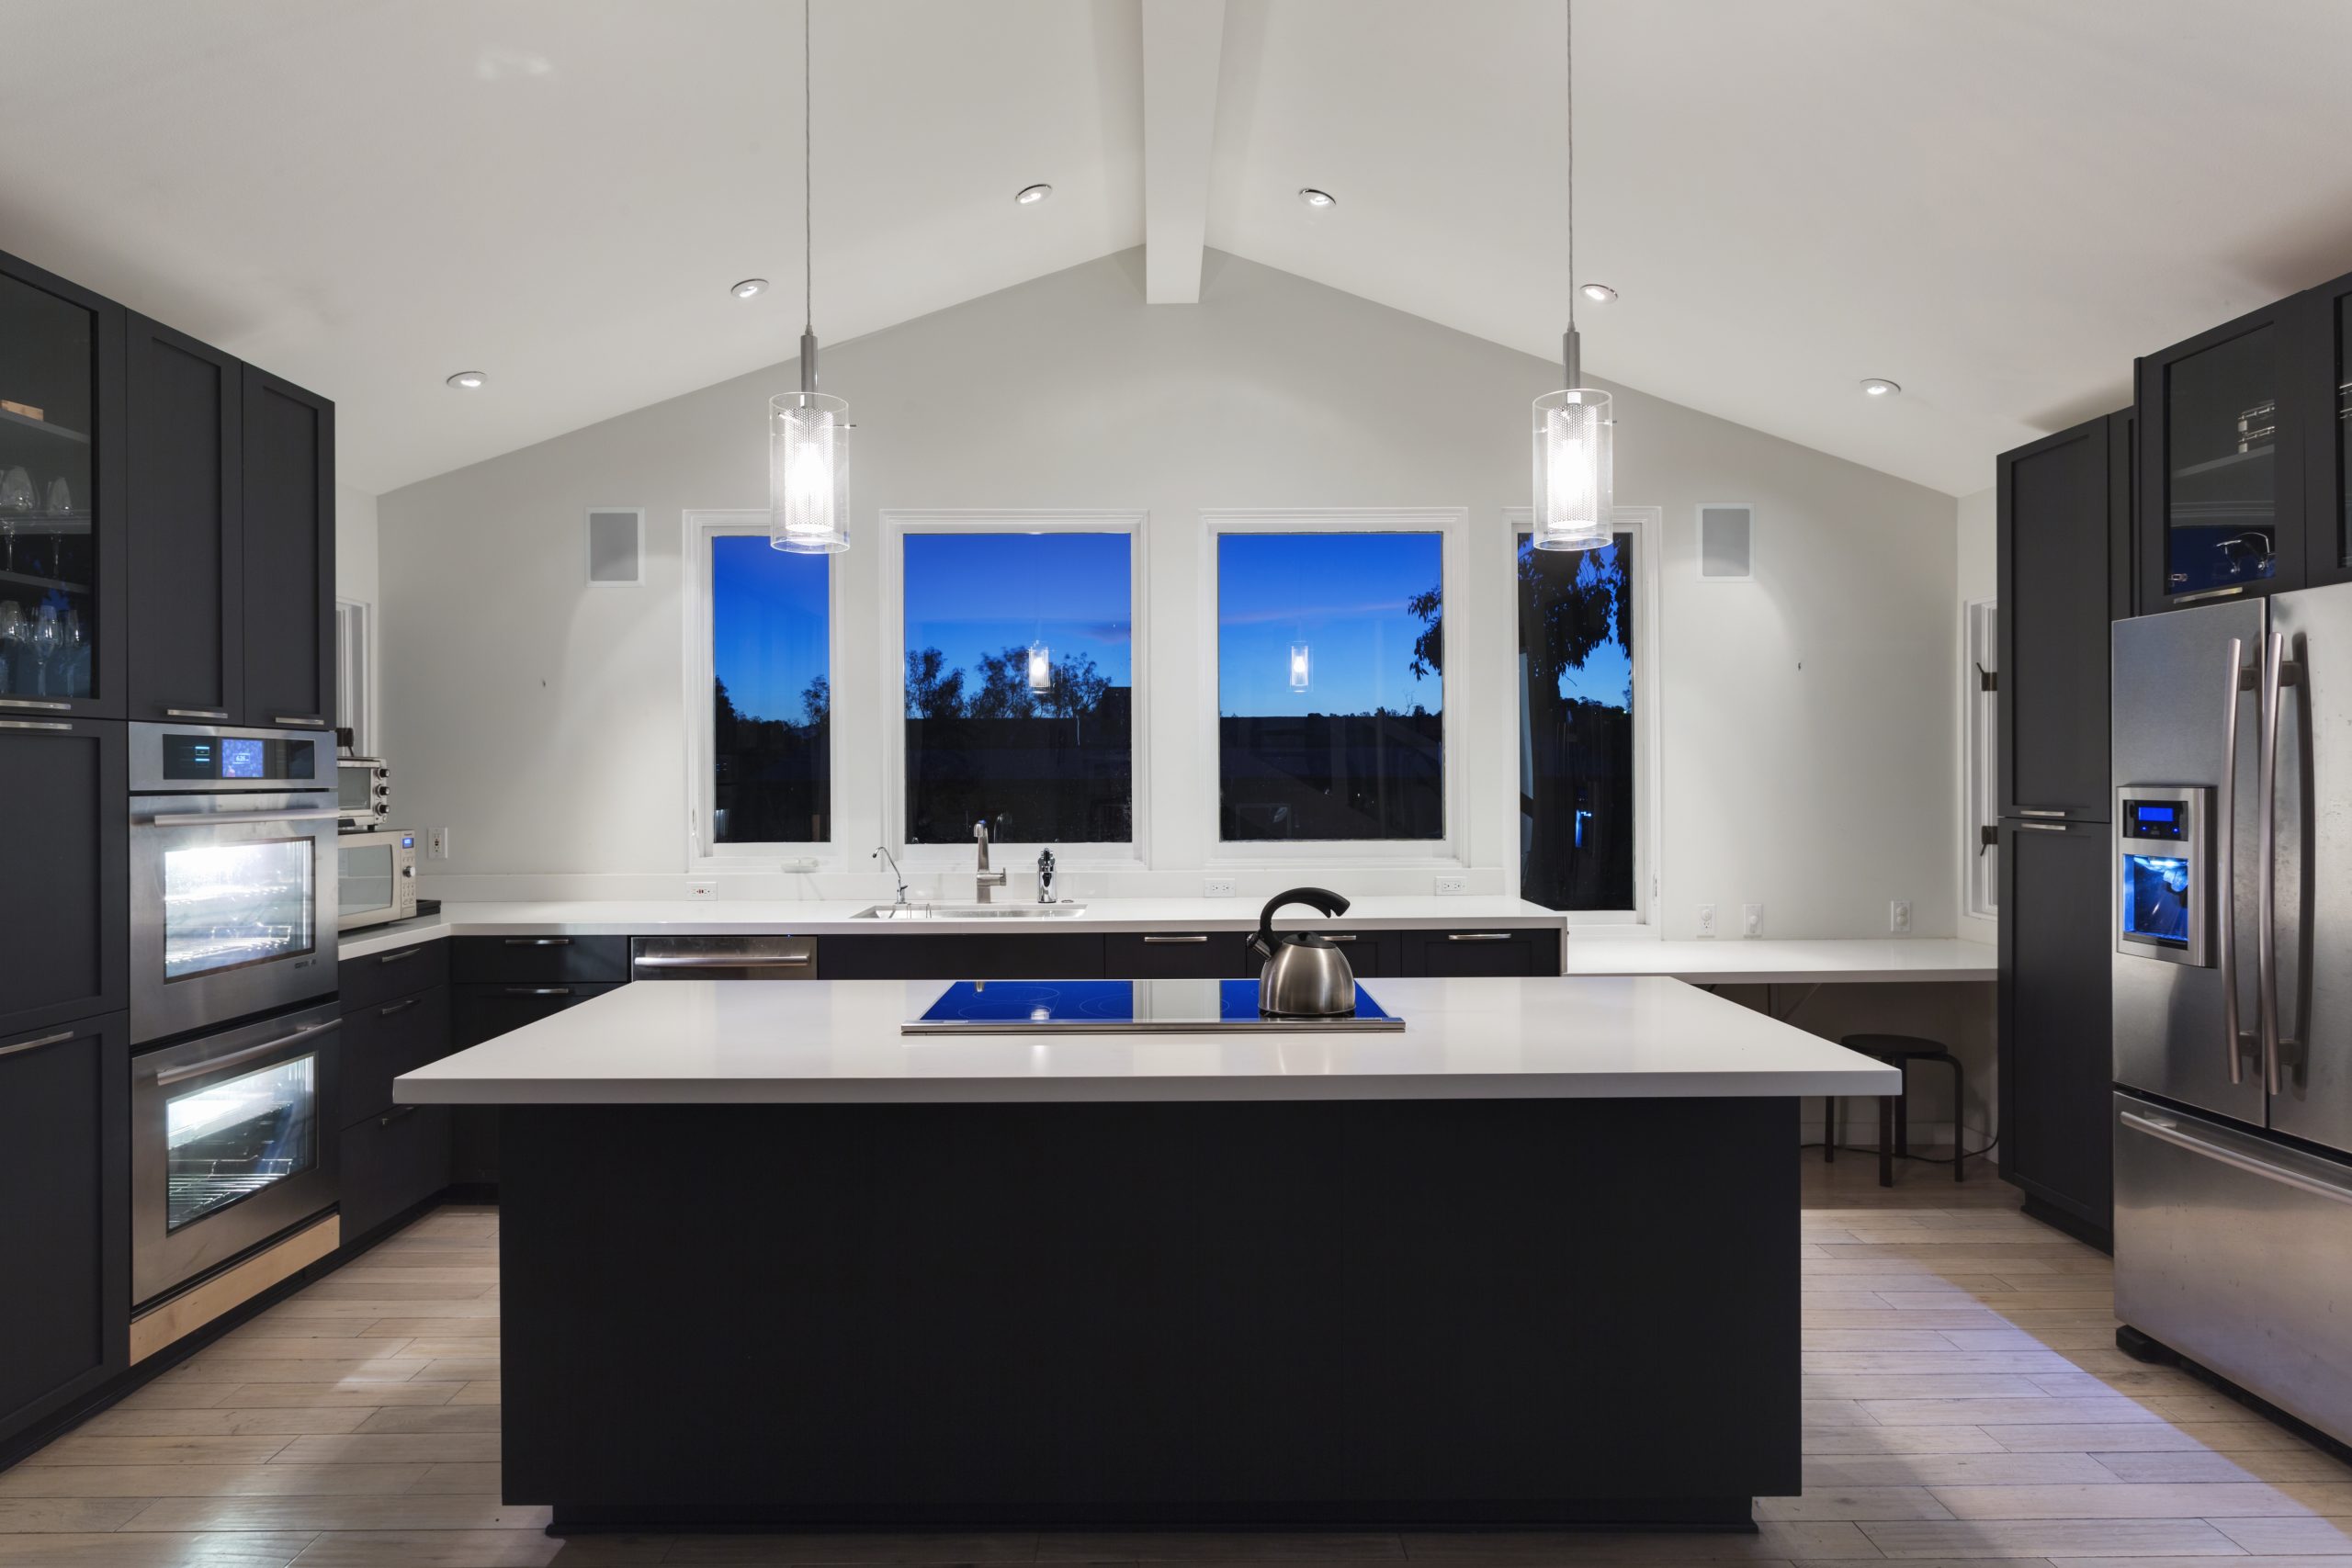 Why choose a luxury bespoke kitchen?